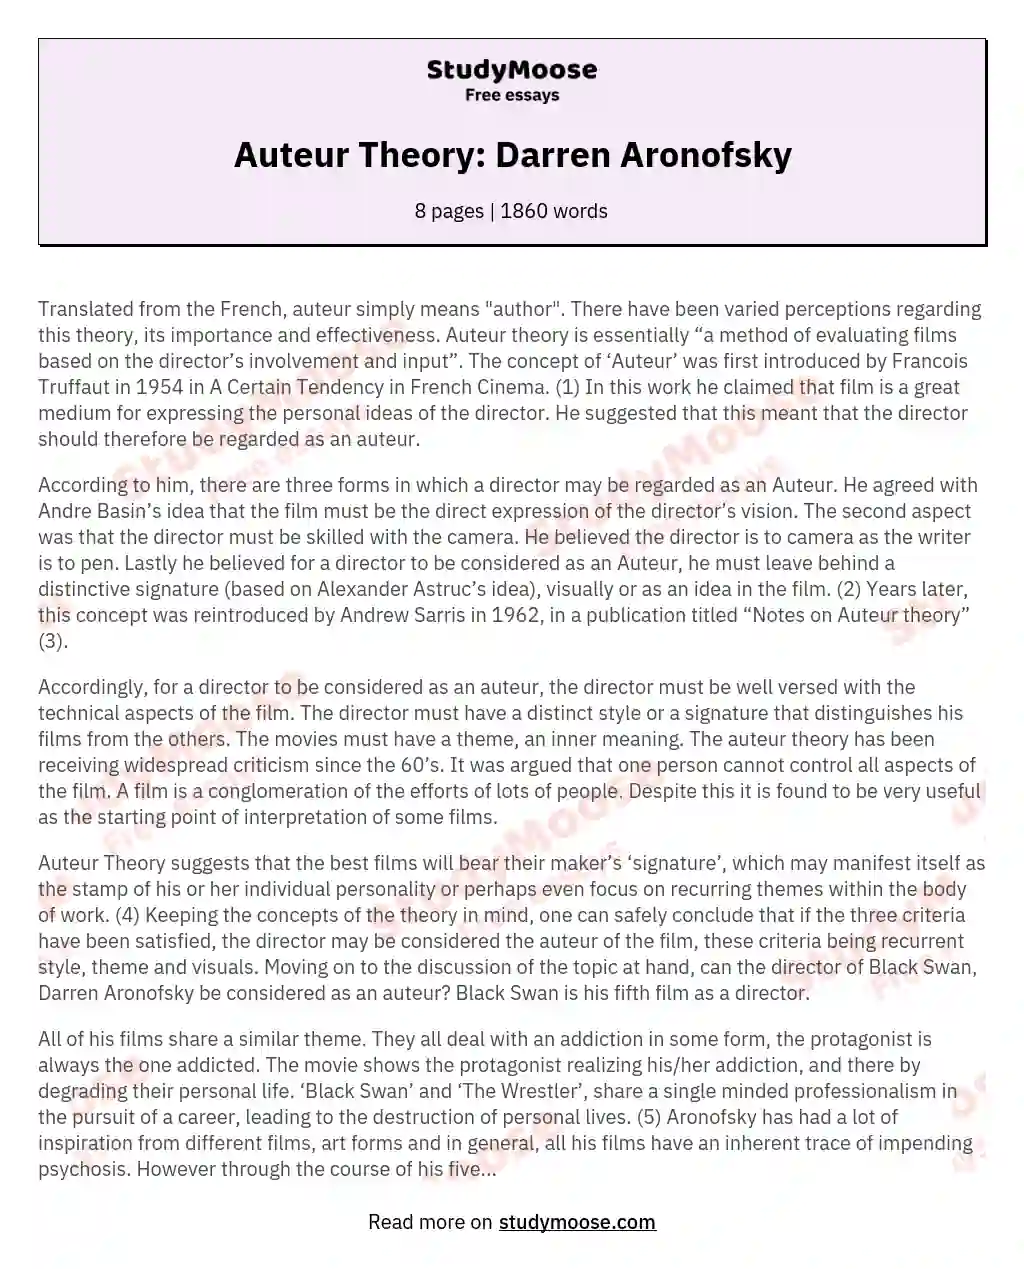 Darren Aronofsky's Auteur Style in Black Swan essay